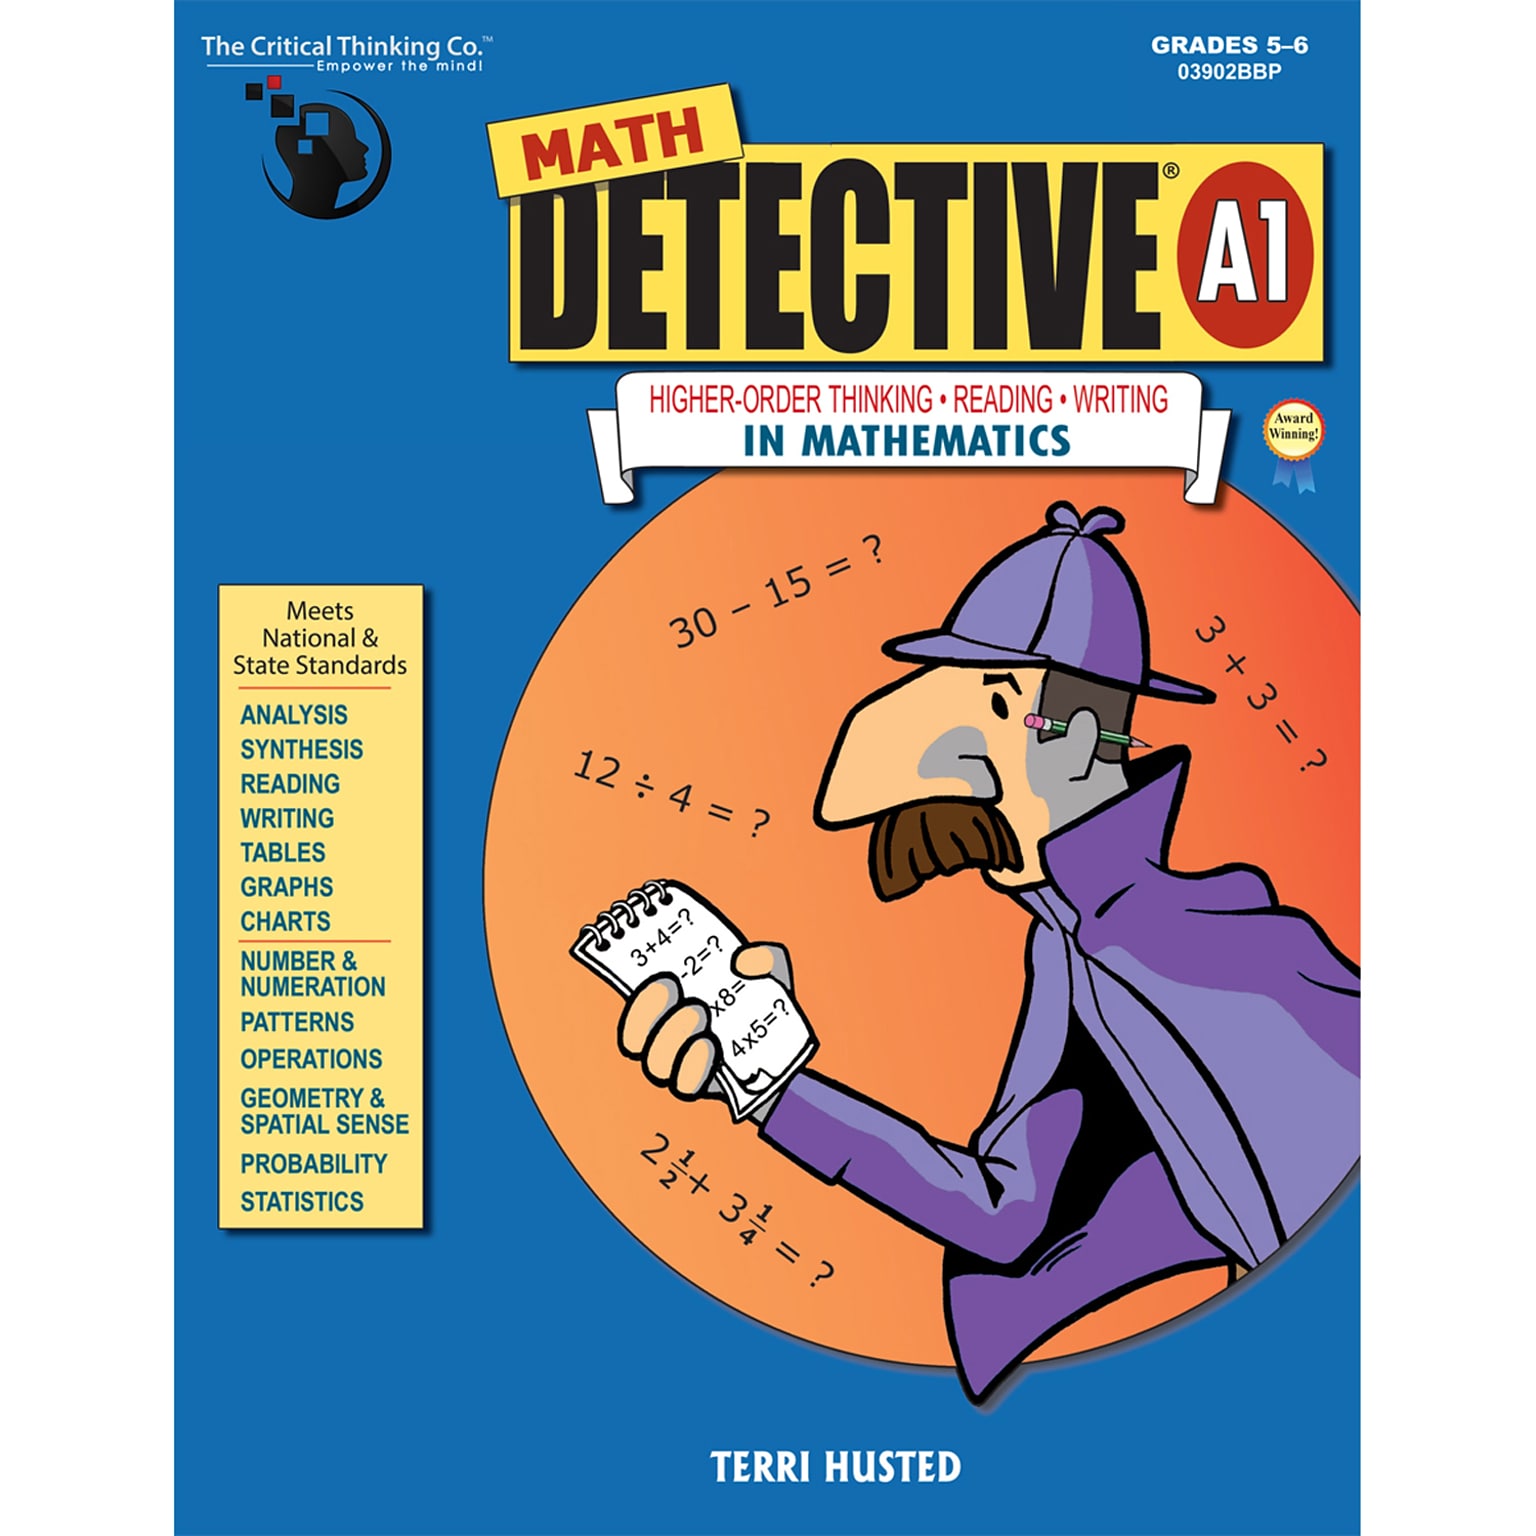 Math Detective, Level A1, Grades 5-6, Paperback (CTB3902)